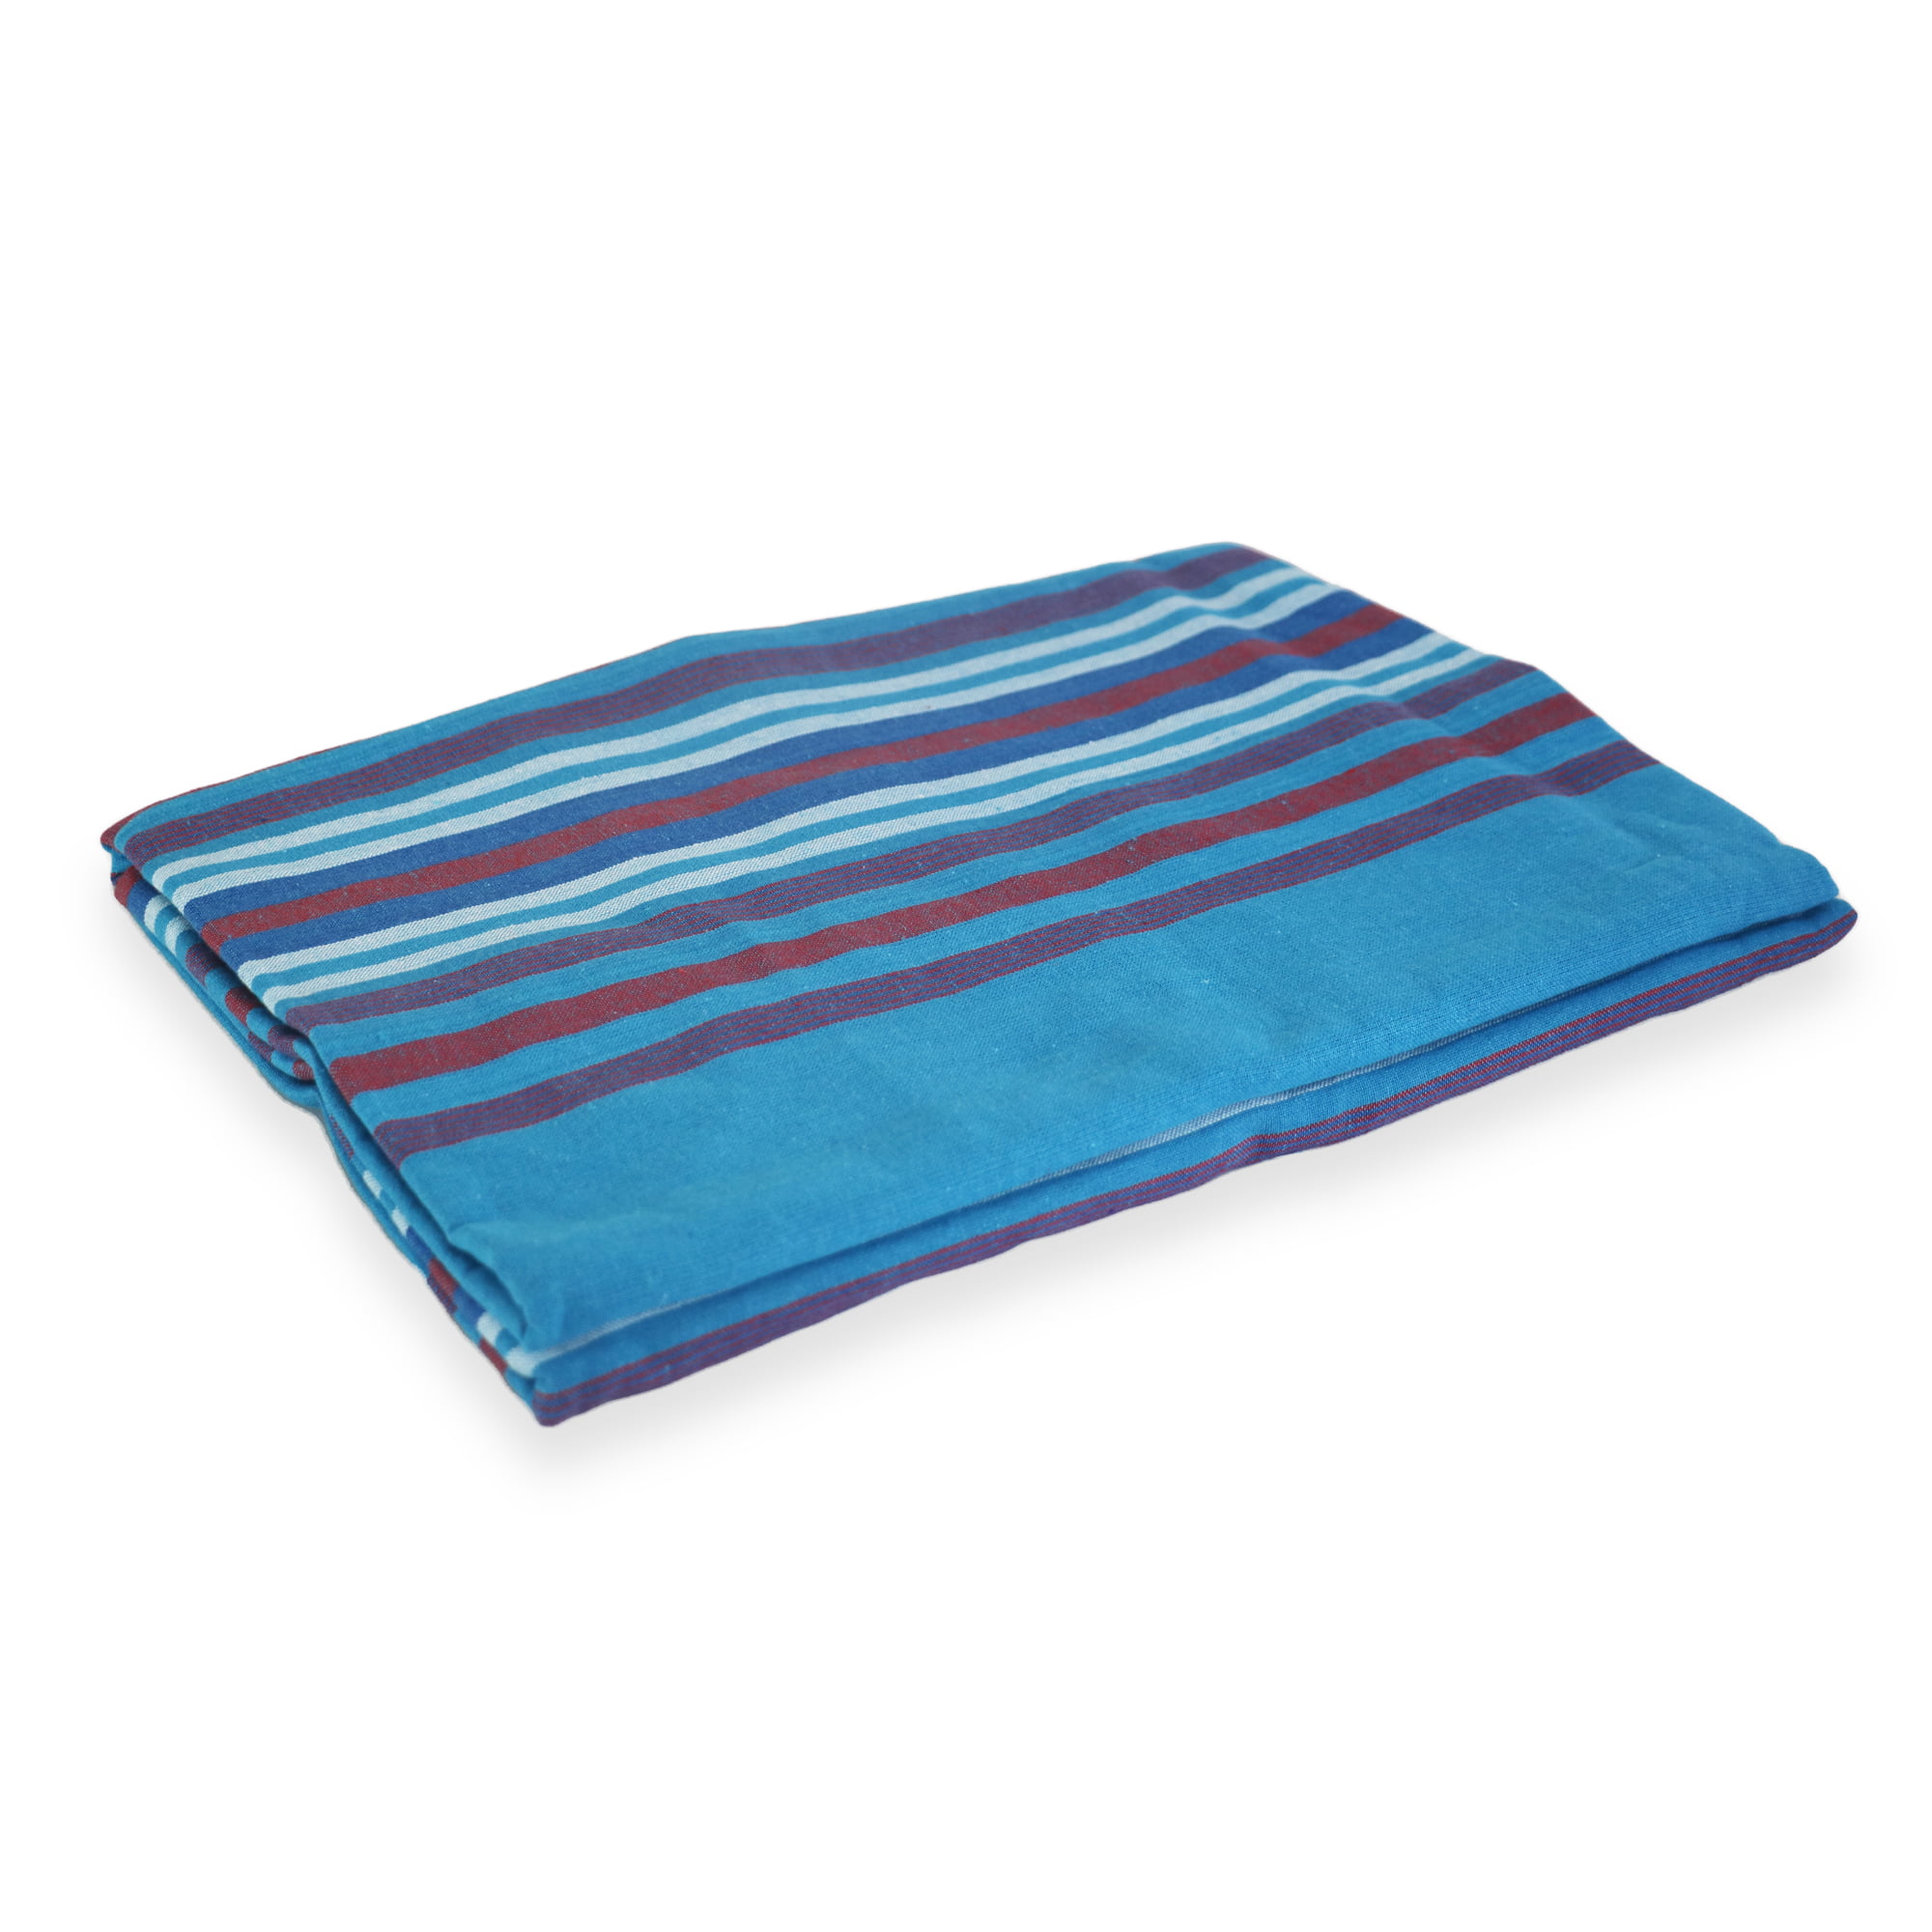 Bed Sheet Cotton Handloom 90x90 (Inches) Light Blue